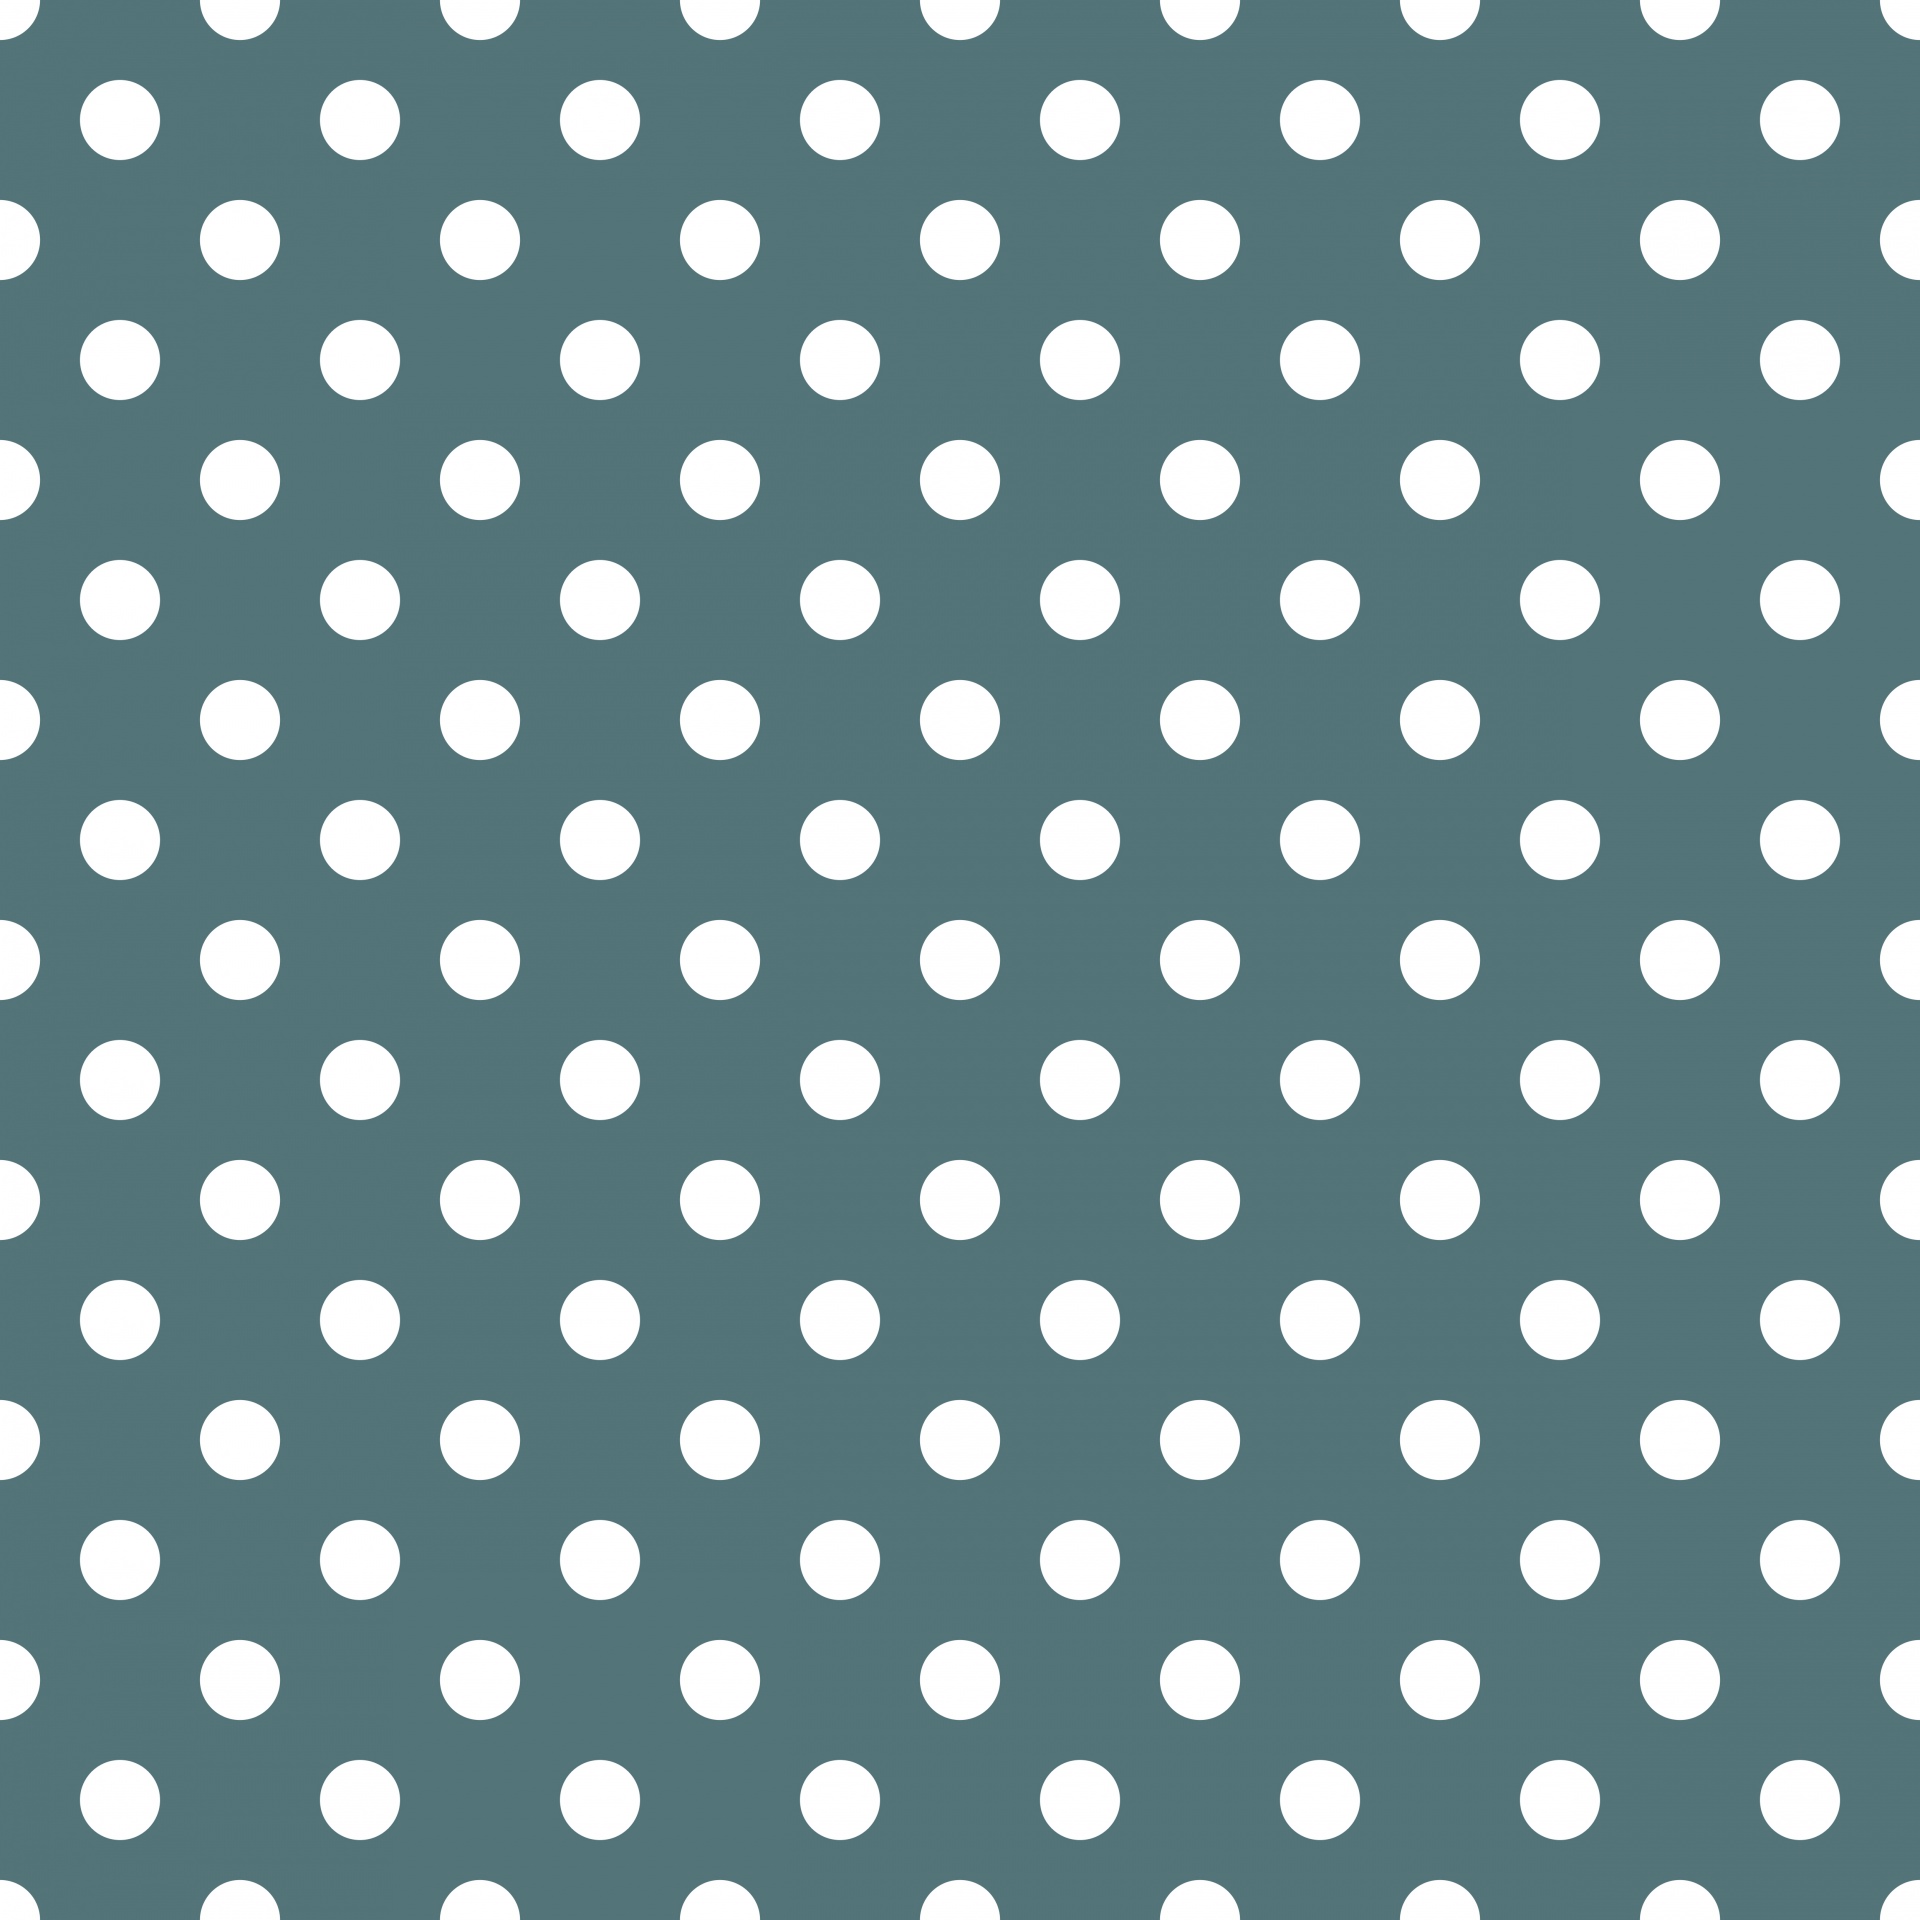 Polka Dots Background